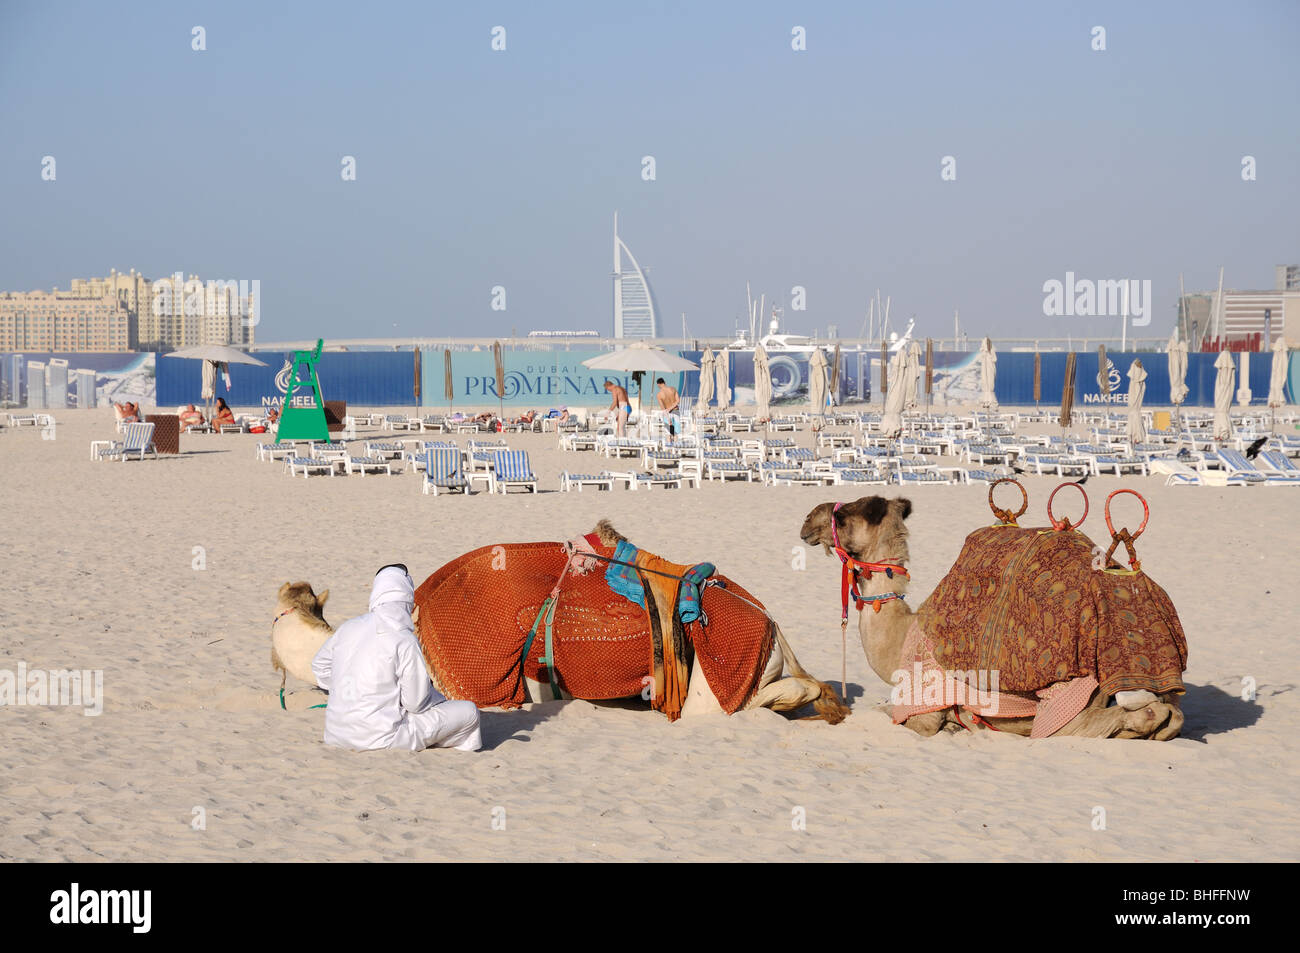 Camels on the Beach in Dubai, United Arab Emirates Stock Photo